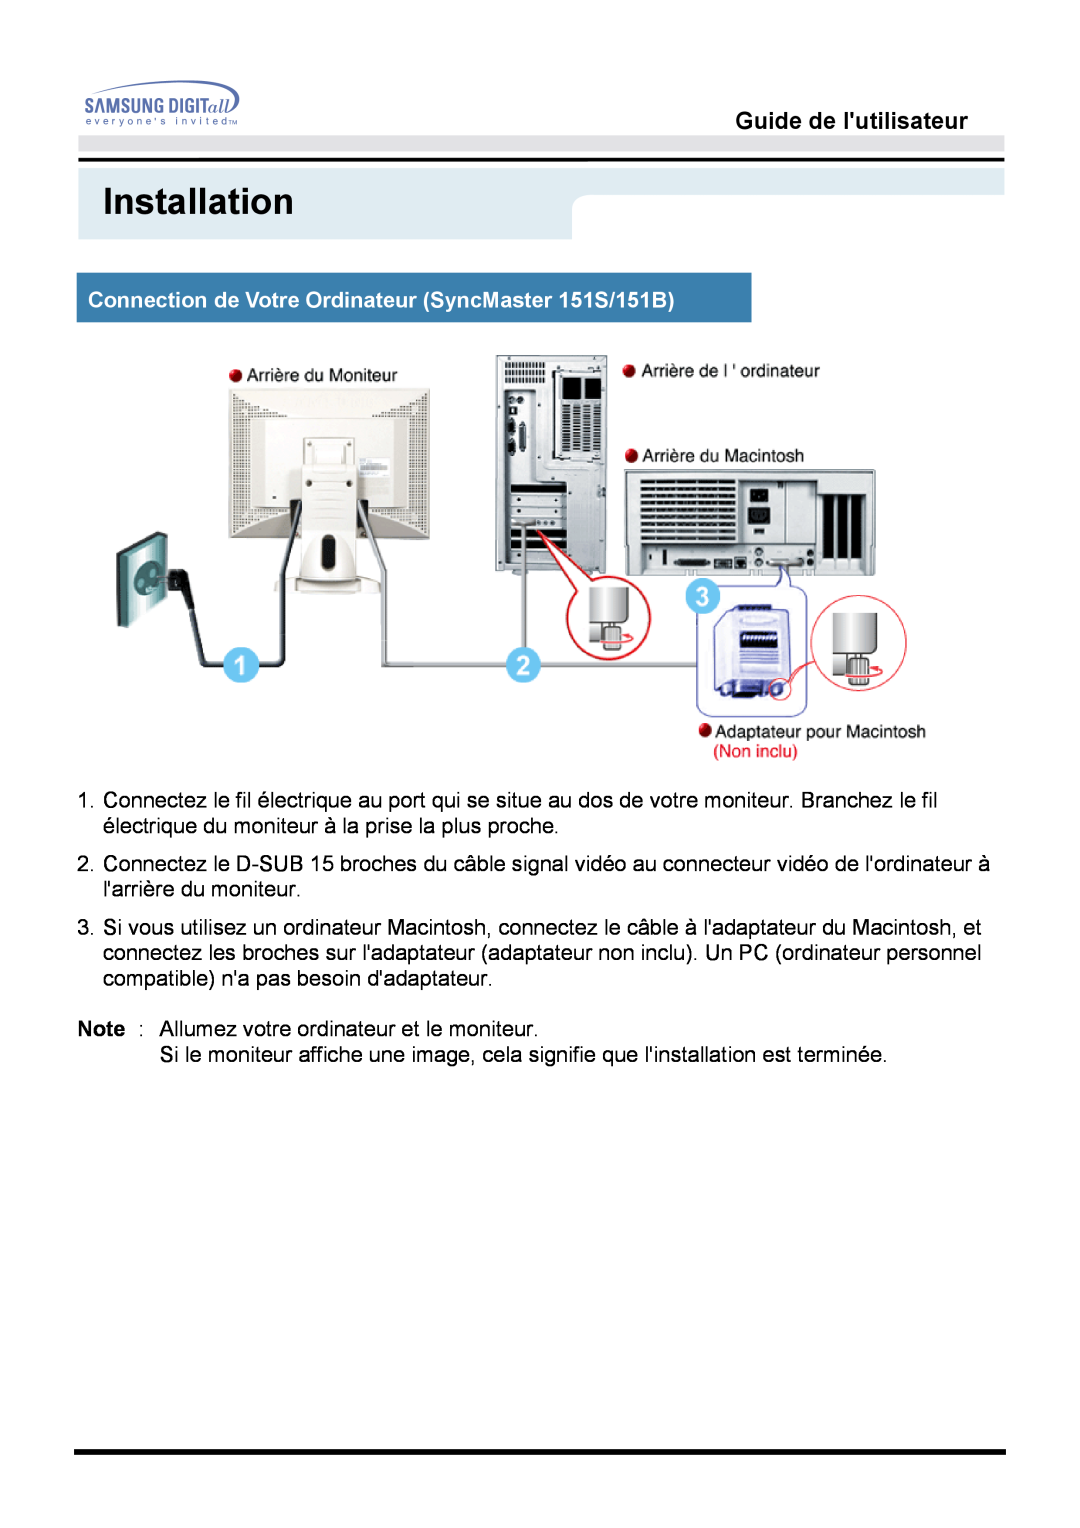 Samsung GG15MSAB/EDC manual Installation, Connection de Votre Ordinateur SyncMaster 151S/151B, Guide de lutilisateur 